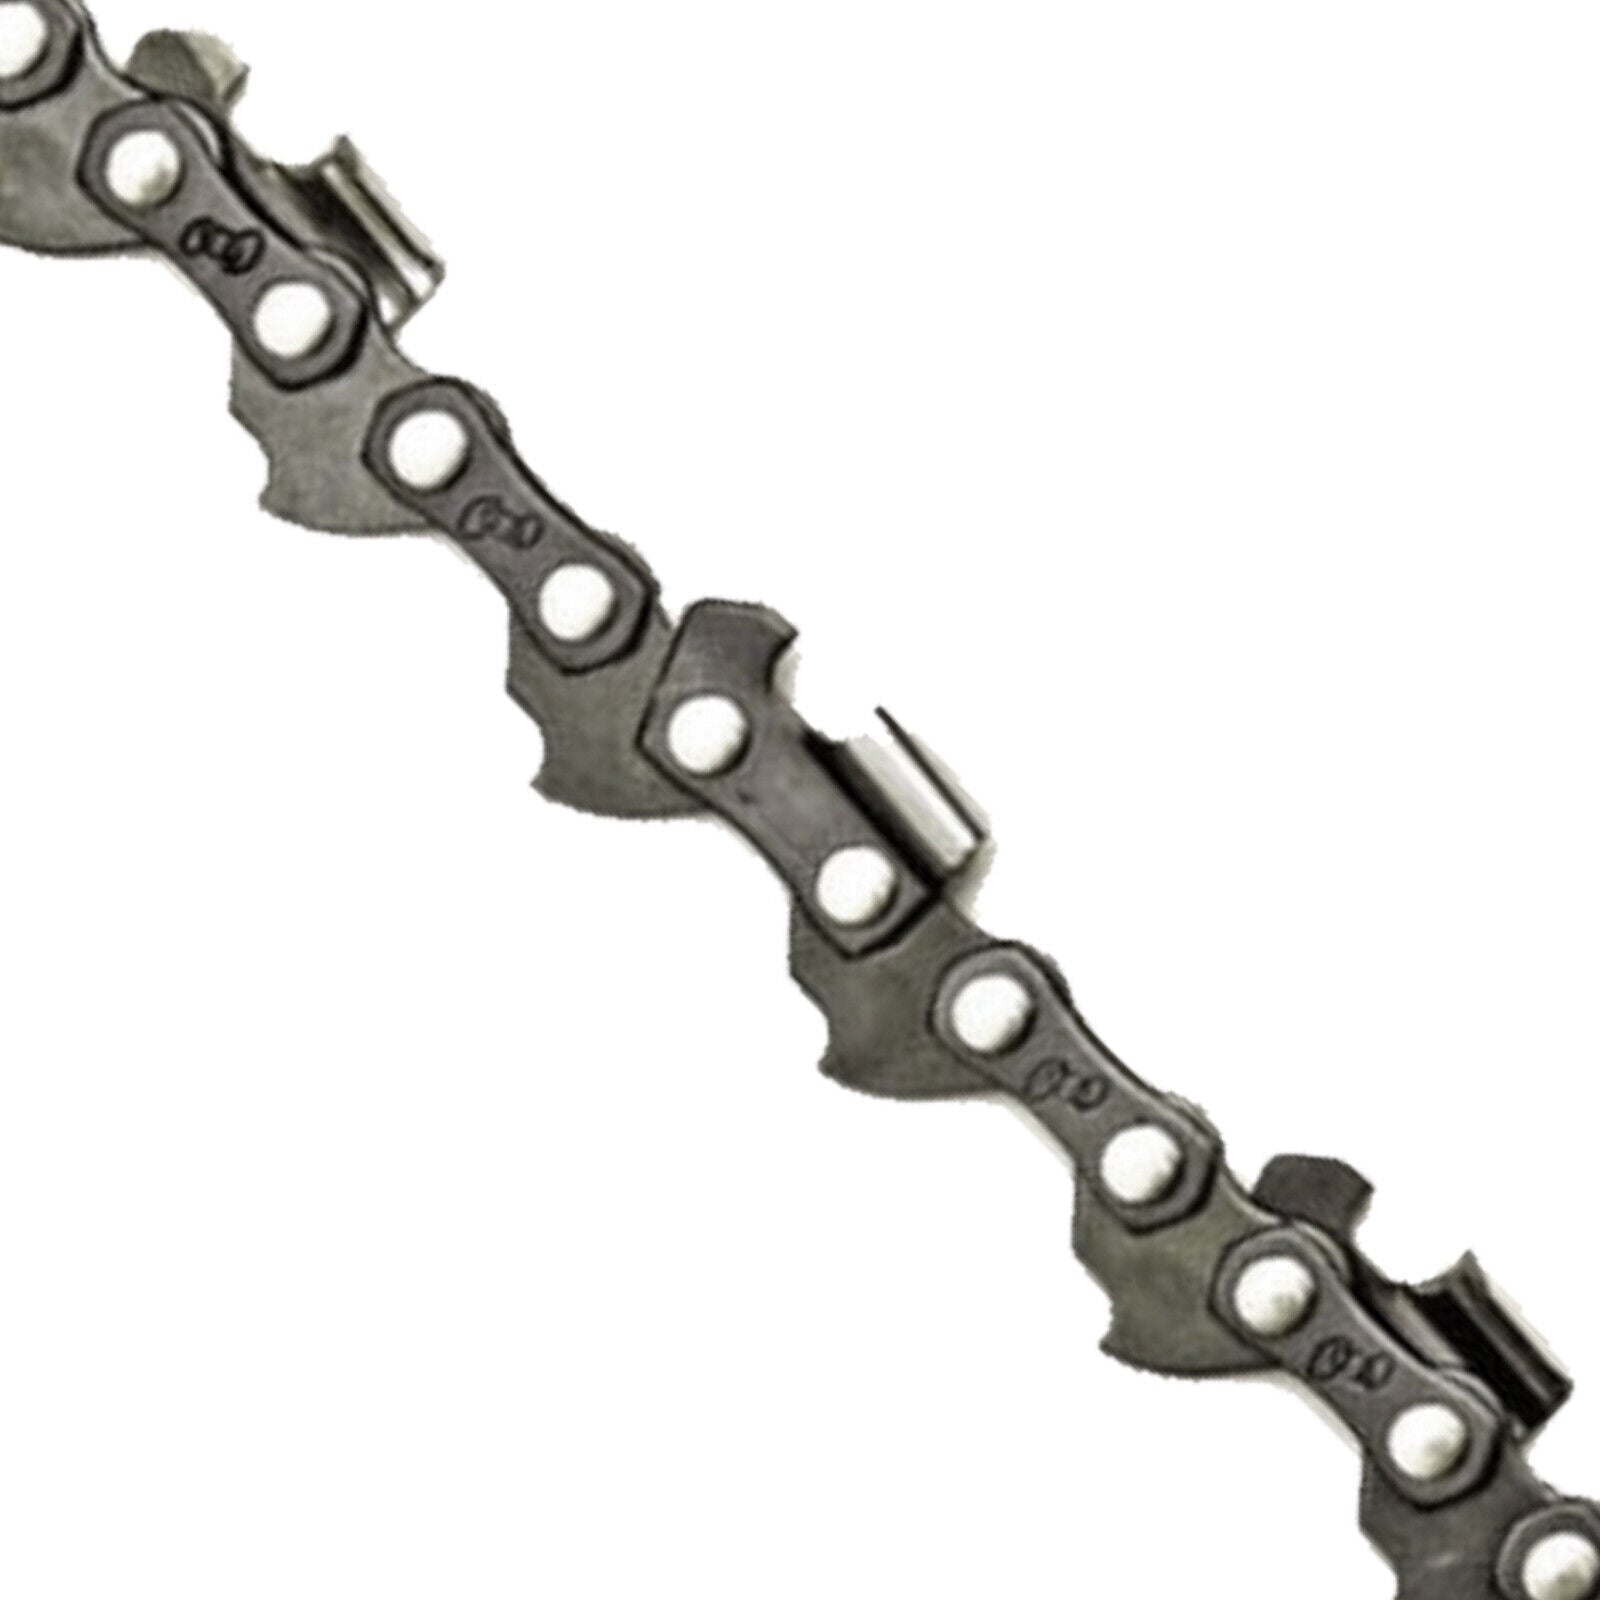 Saw Chain 33 Drive Link 8" 20cm Bar for RYOBI RPP750S Chainsaw x 2